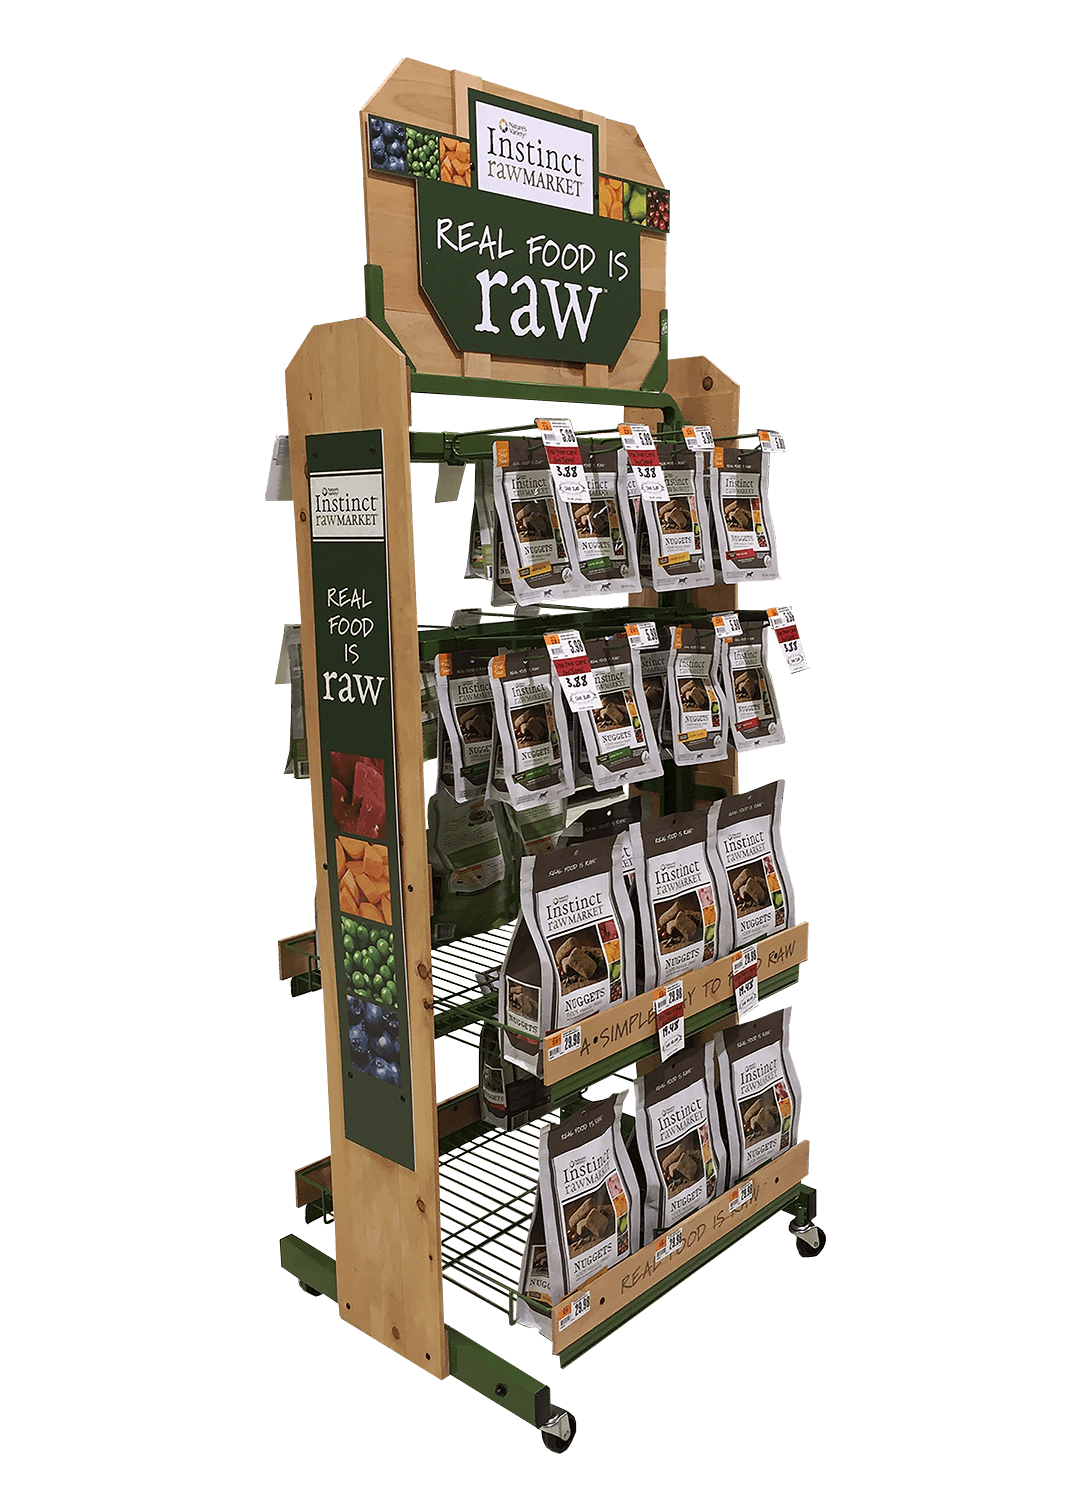 Instinct Raw Market natural foods product display